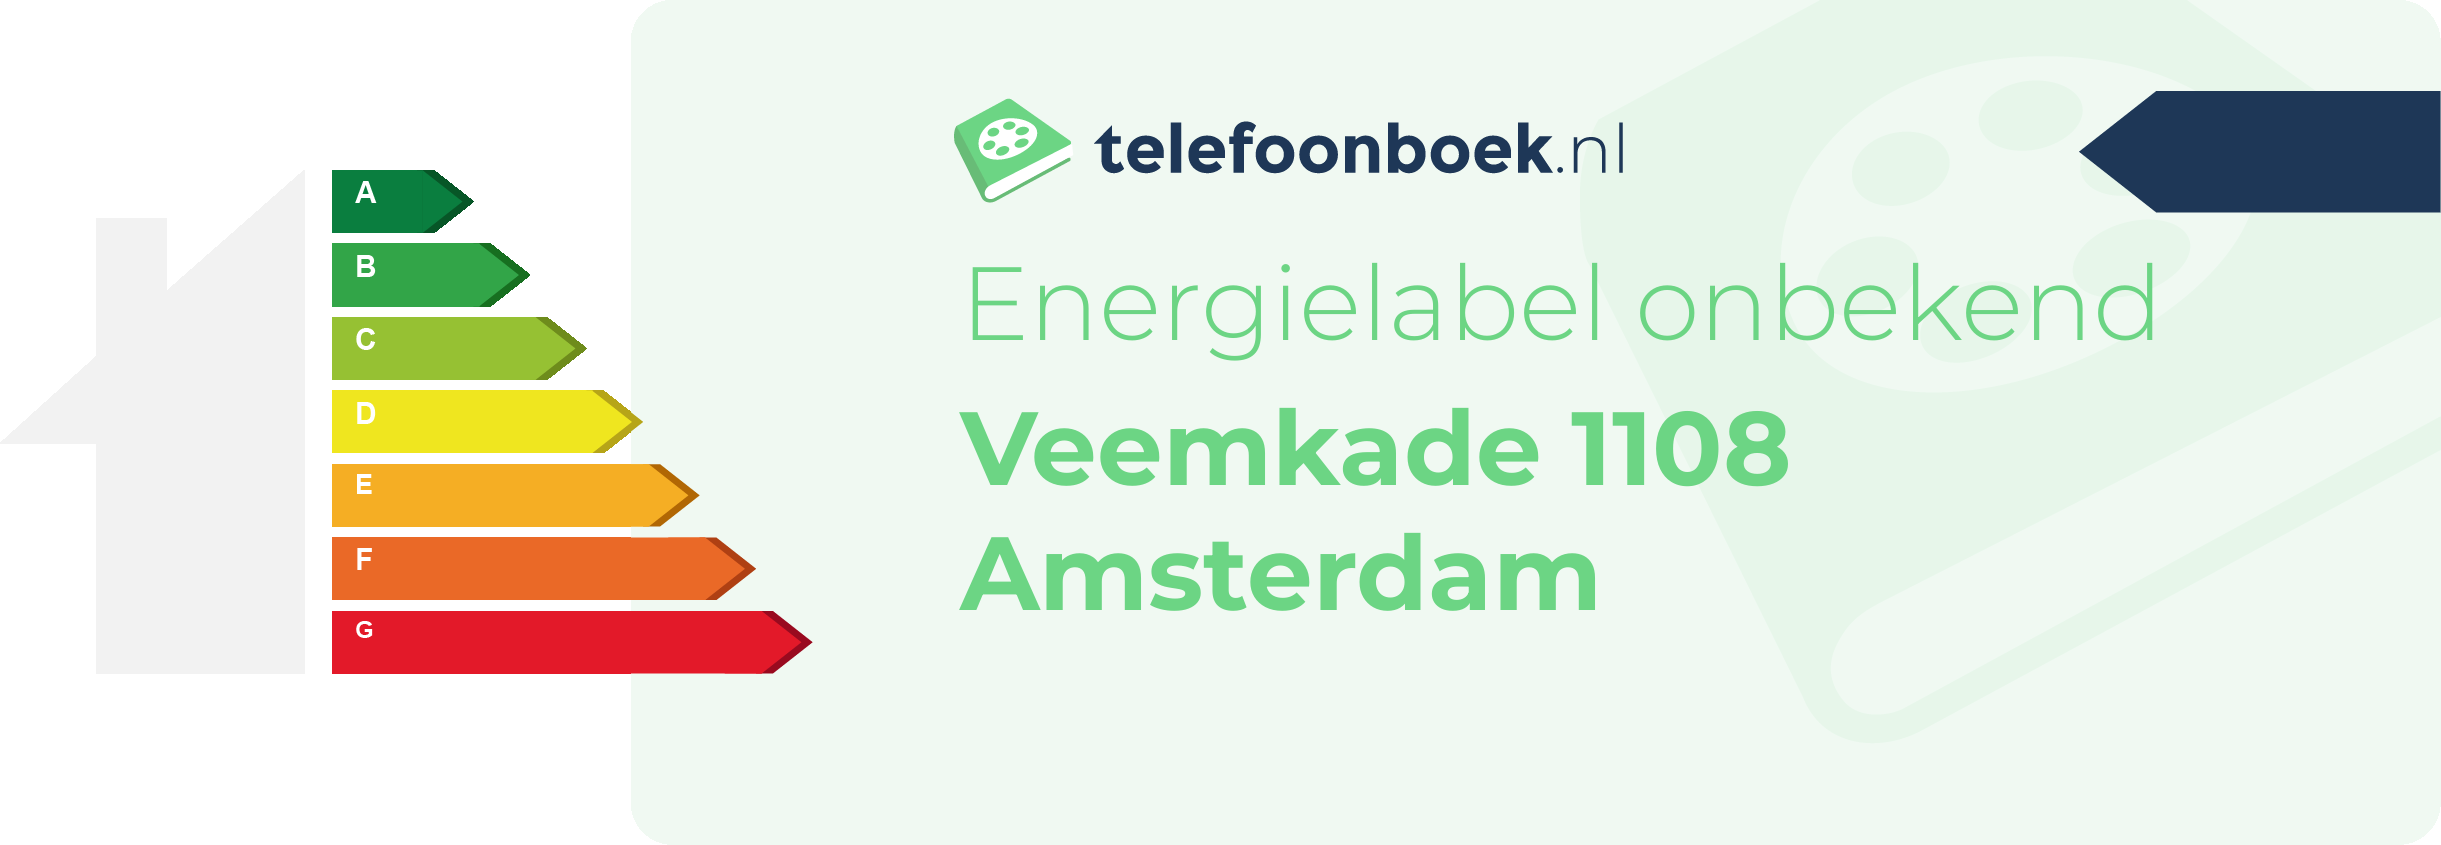 Energielabel Veemkade 1108 Amsterdam